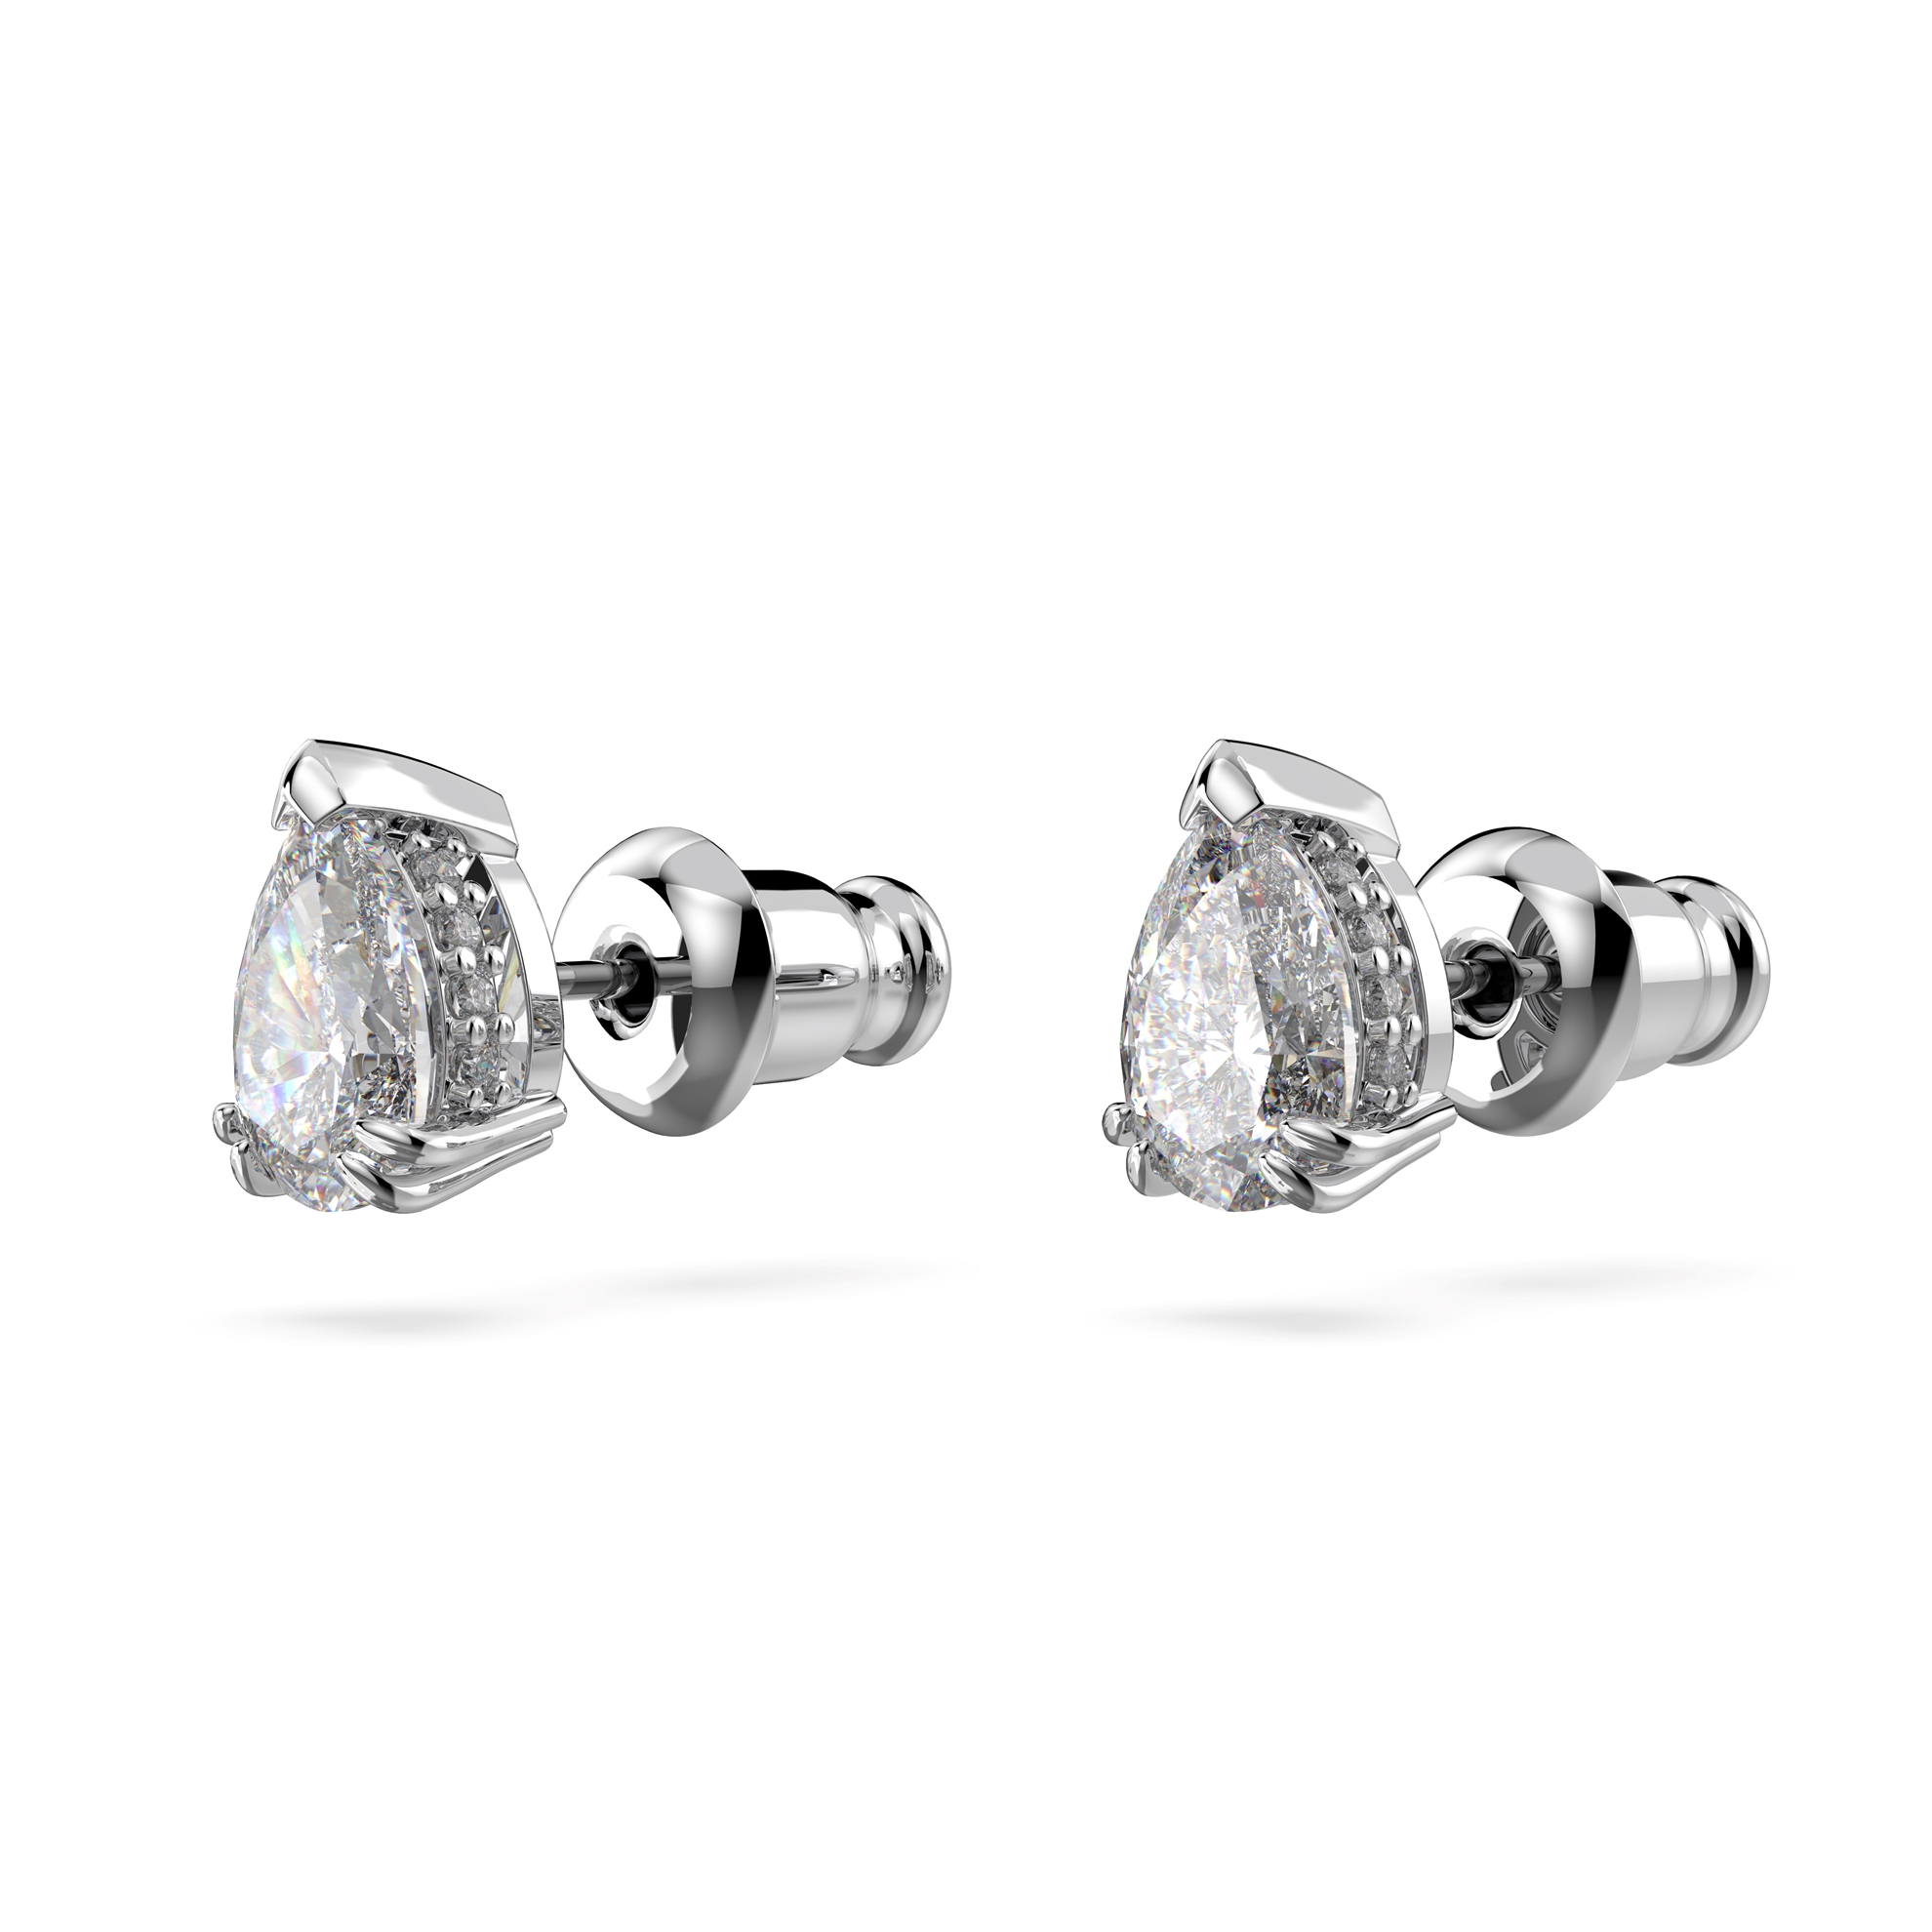 Picture of Millenia stud earrings